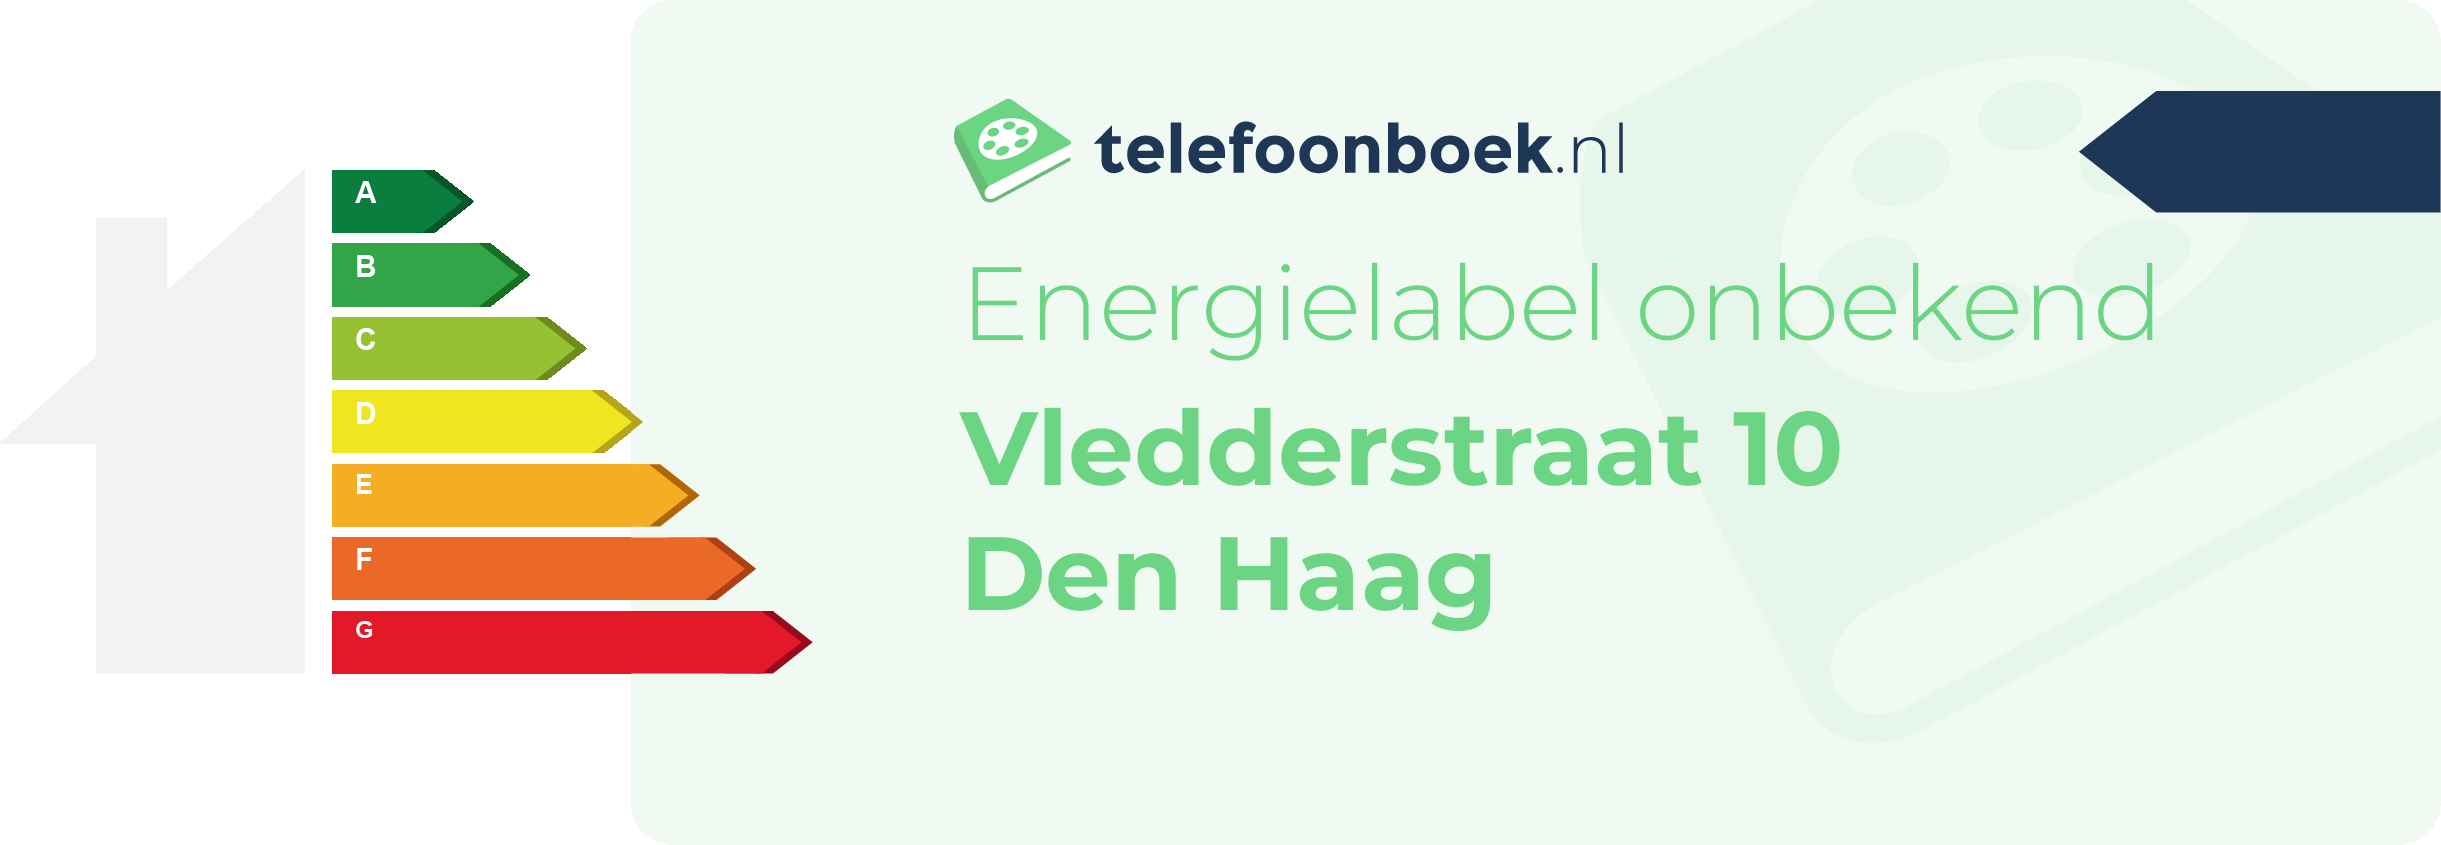 Energielabel Vledderstraat 10 Den Haag